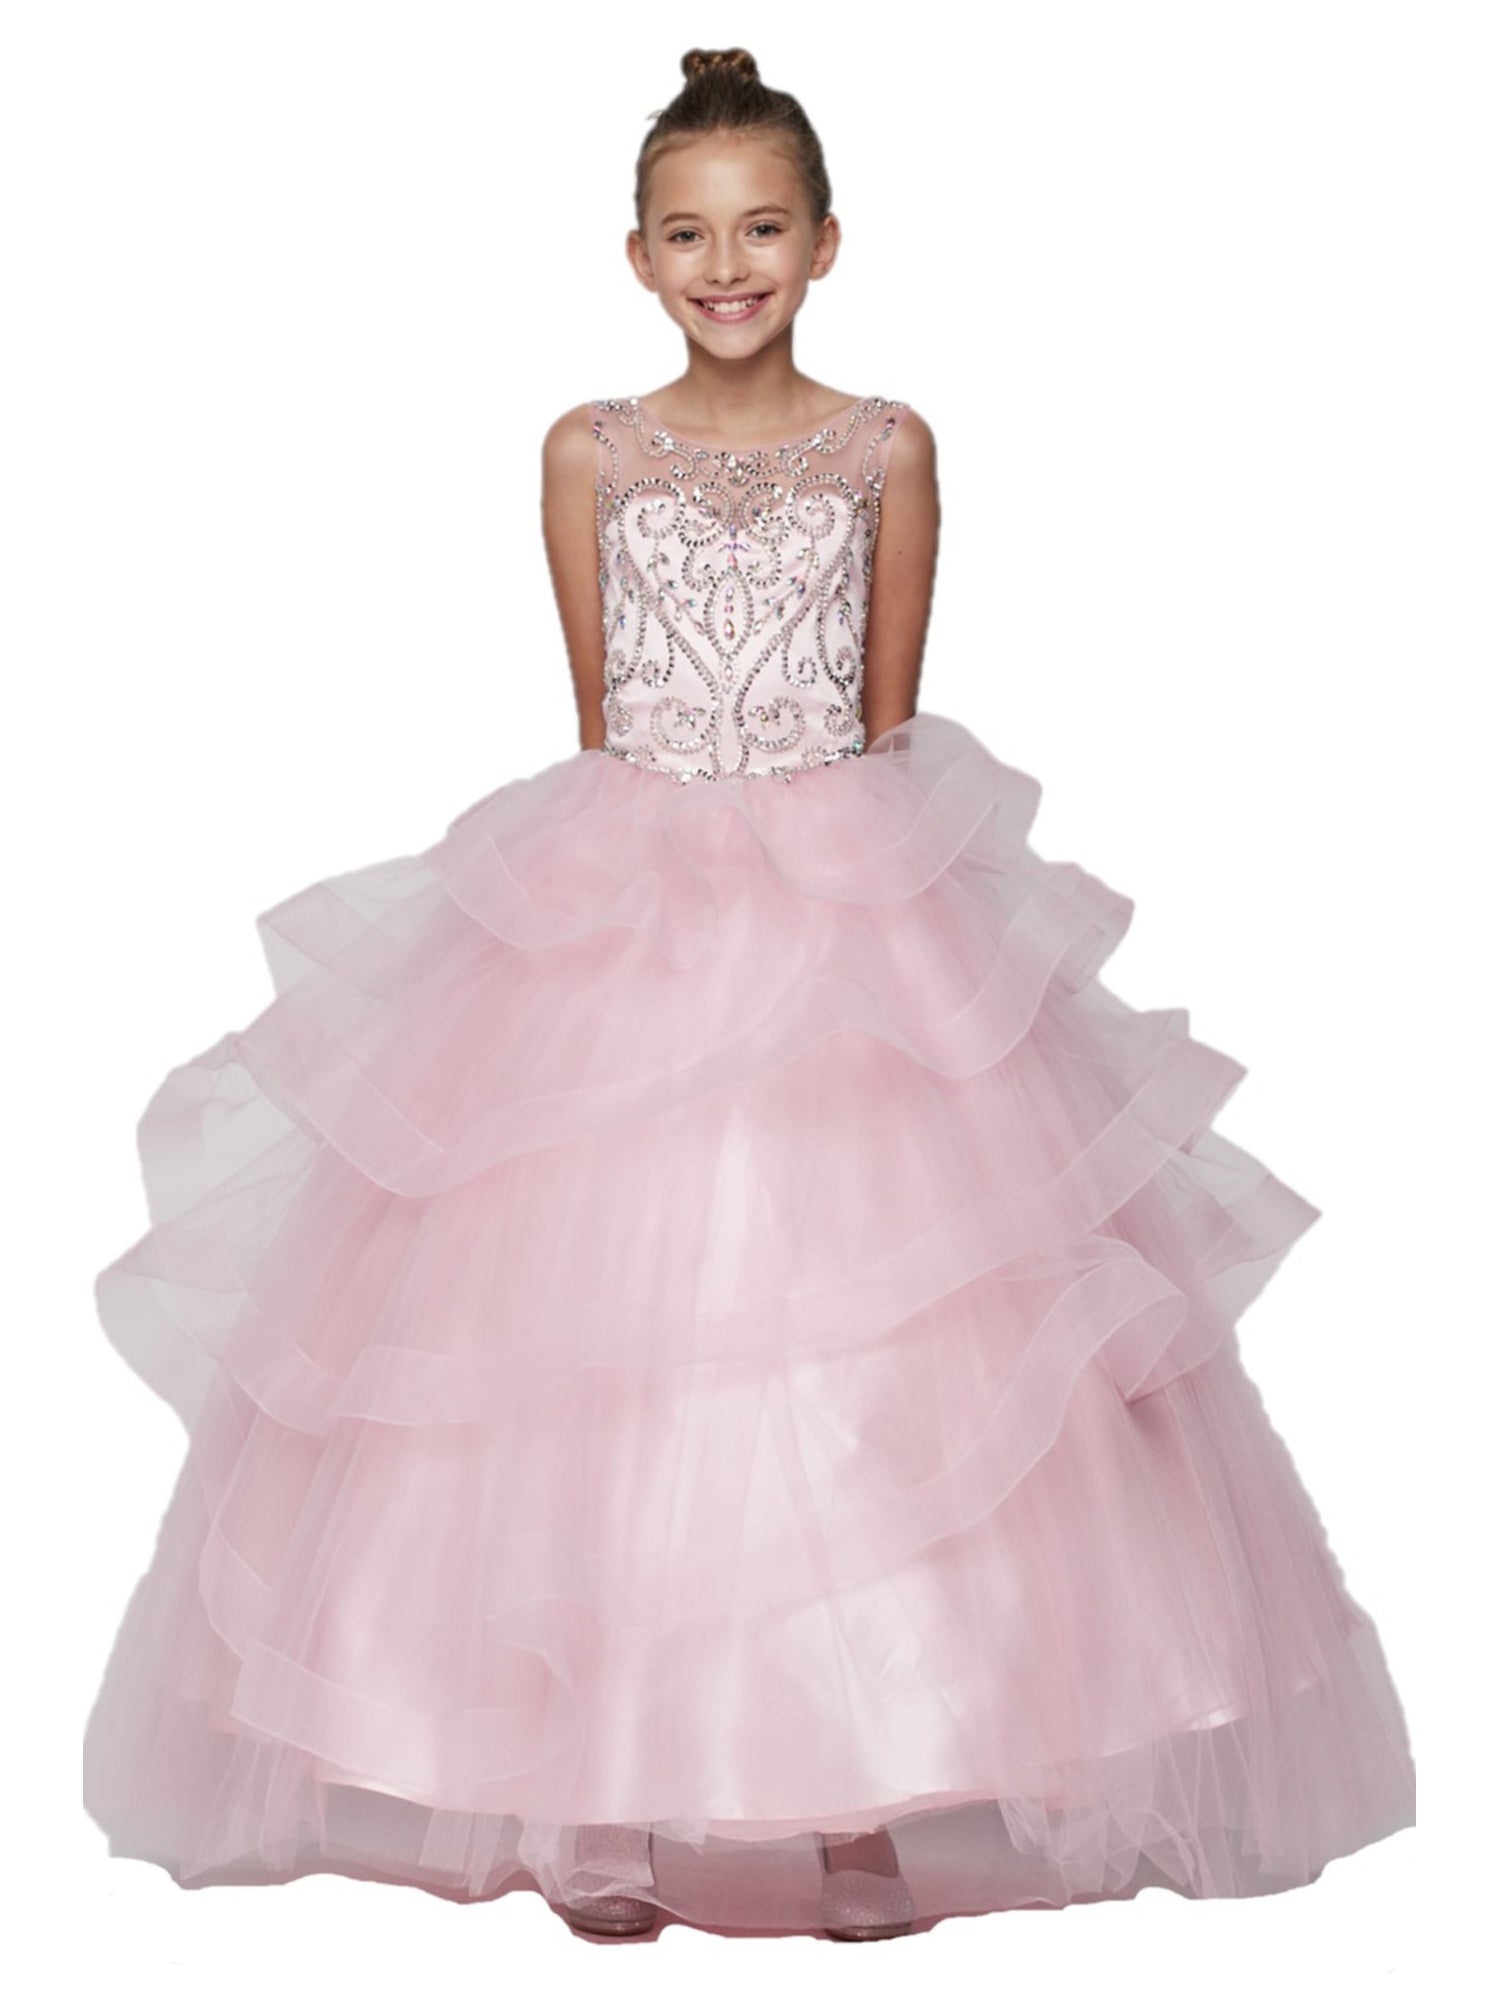 Beautiful Pageant Girl Dress  Girls National Pageant Dress - Blush Kids  Luxury Couture